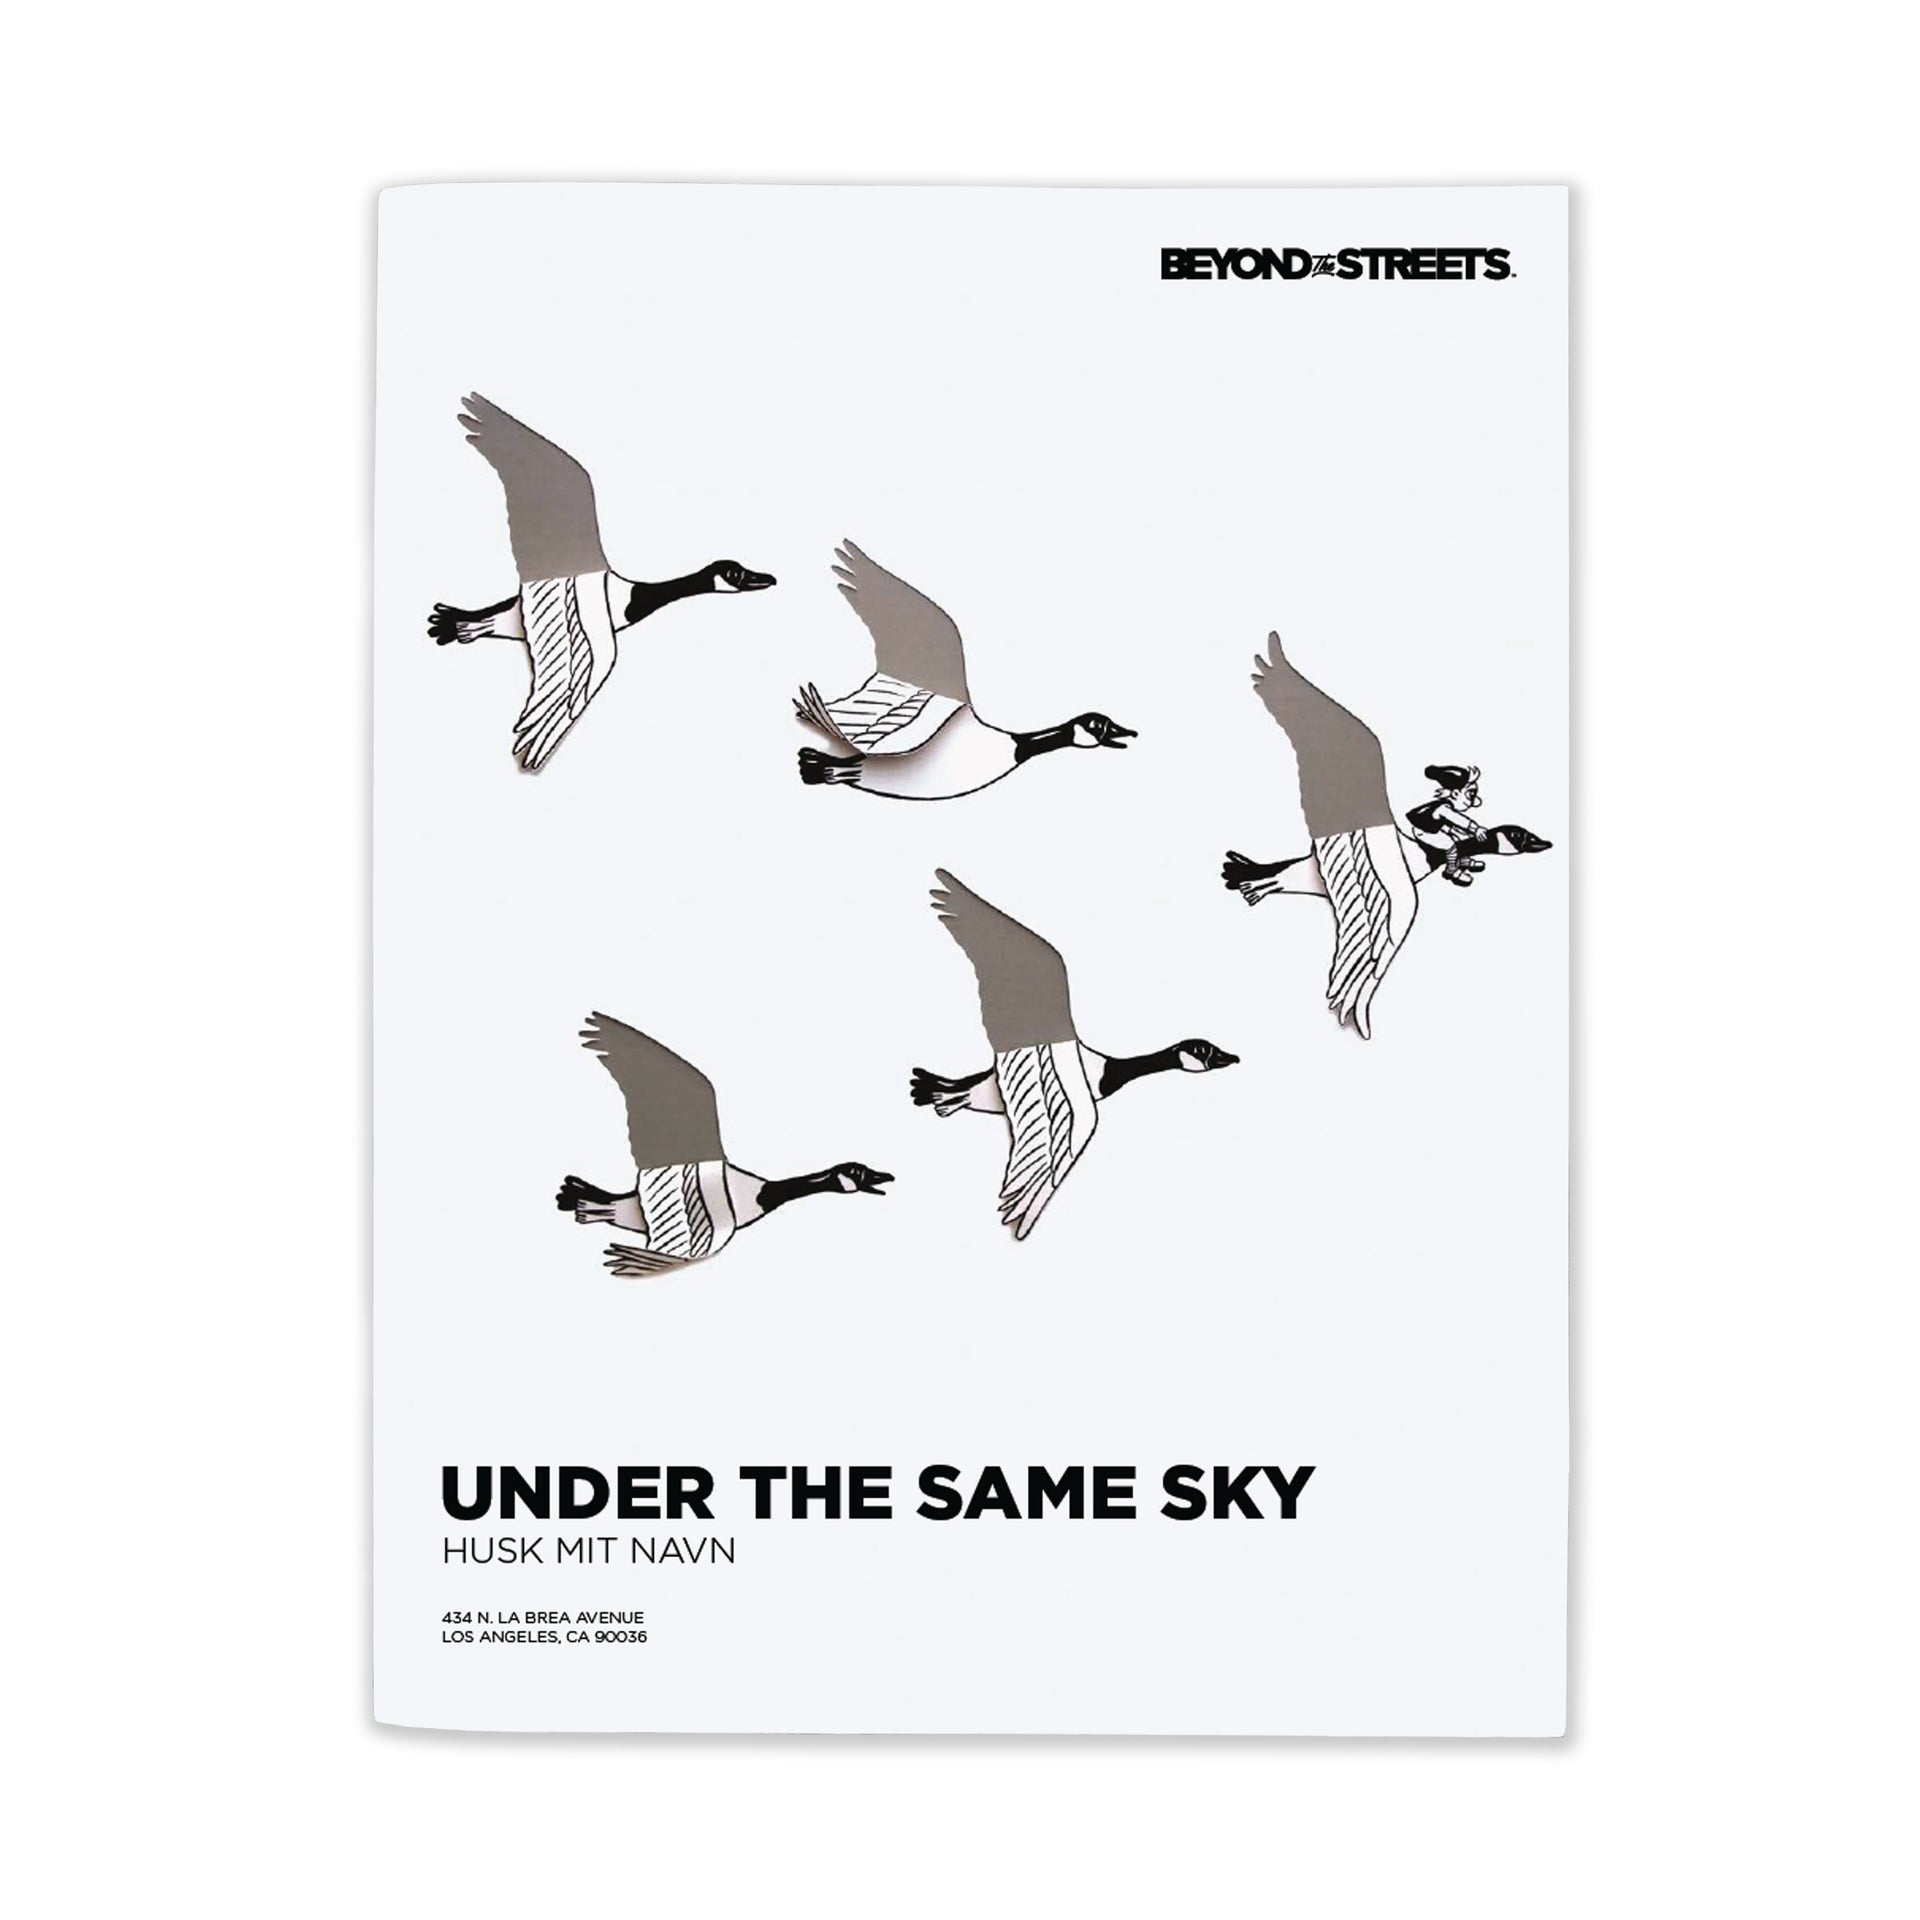 HuskMitNavn "Under The Same Sky" Catalogue